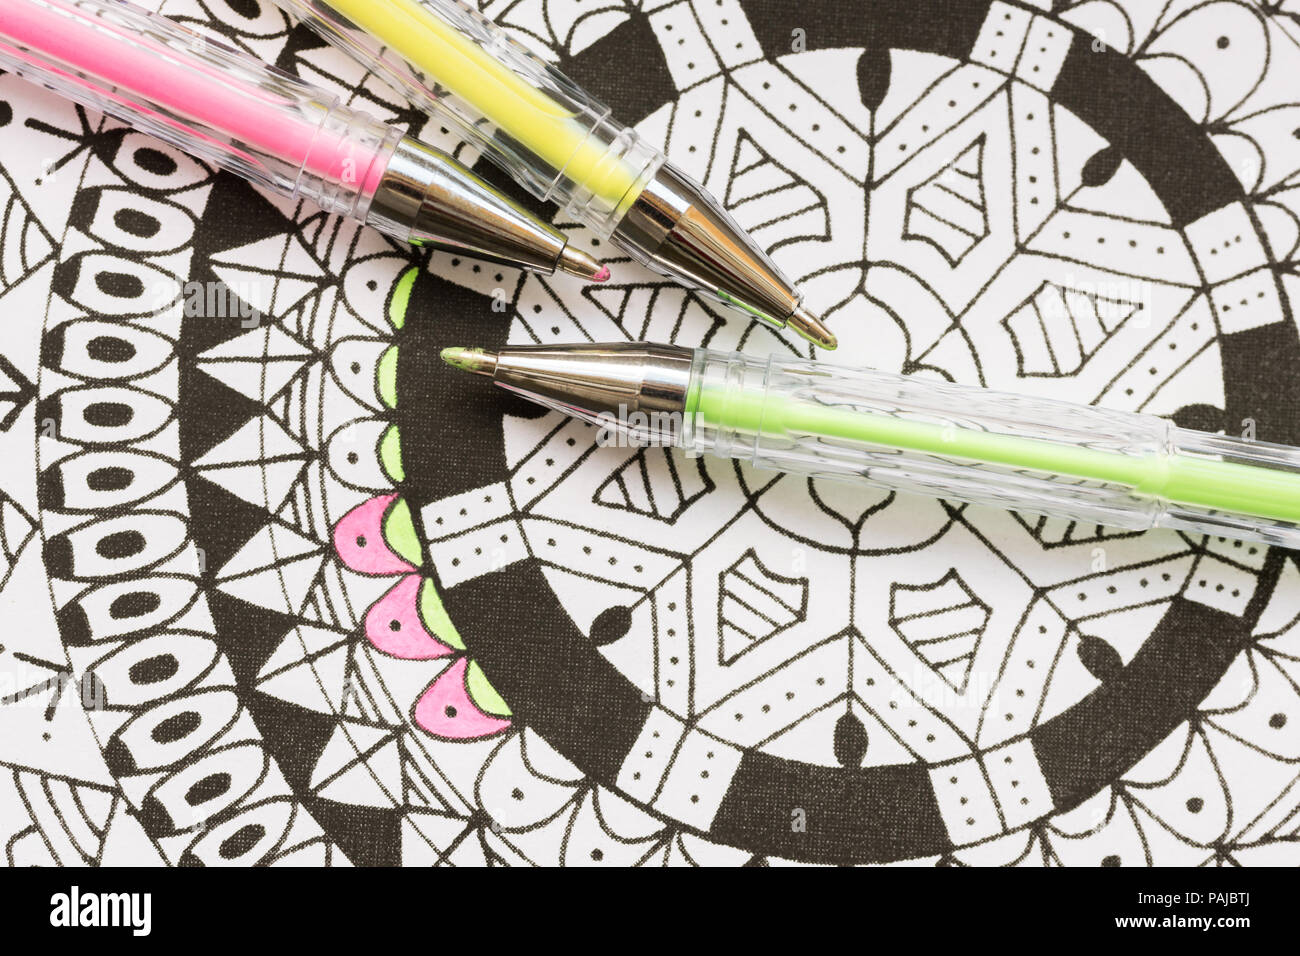 AmazingColors - Gel Pens, Coloring Books, Mandalas and Zentangel